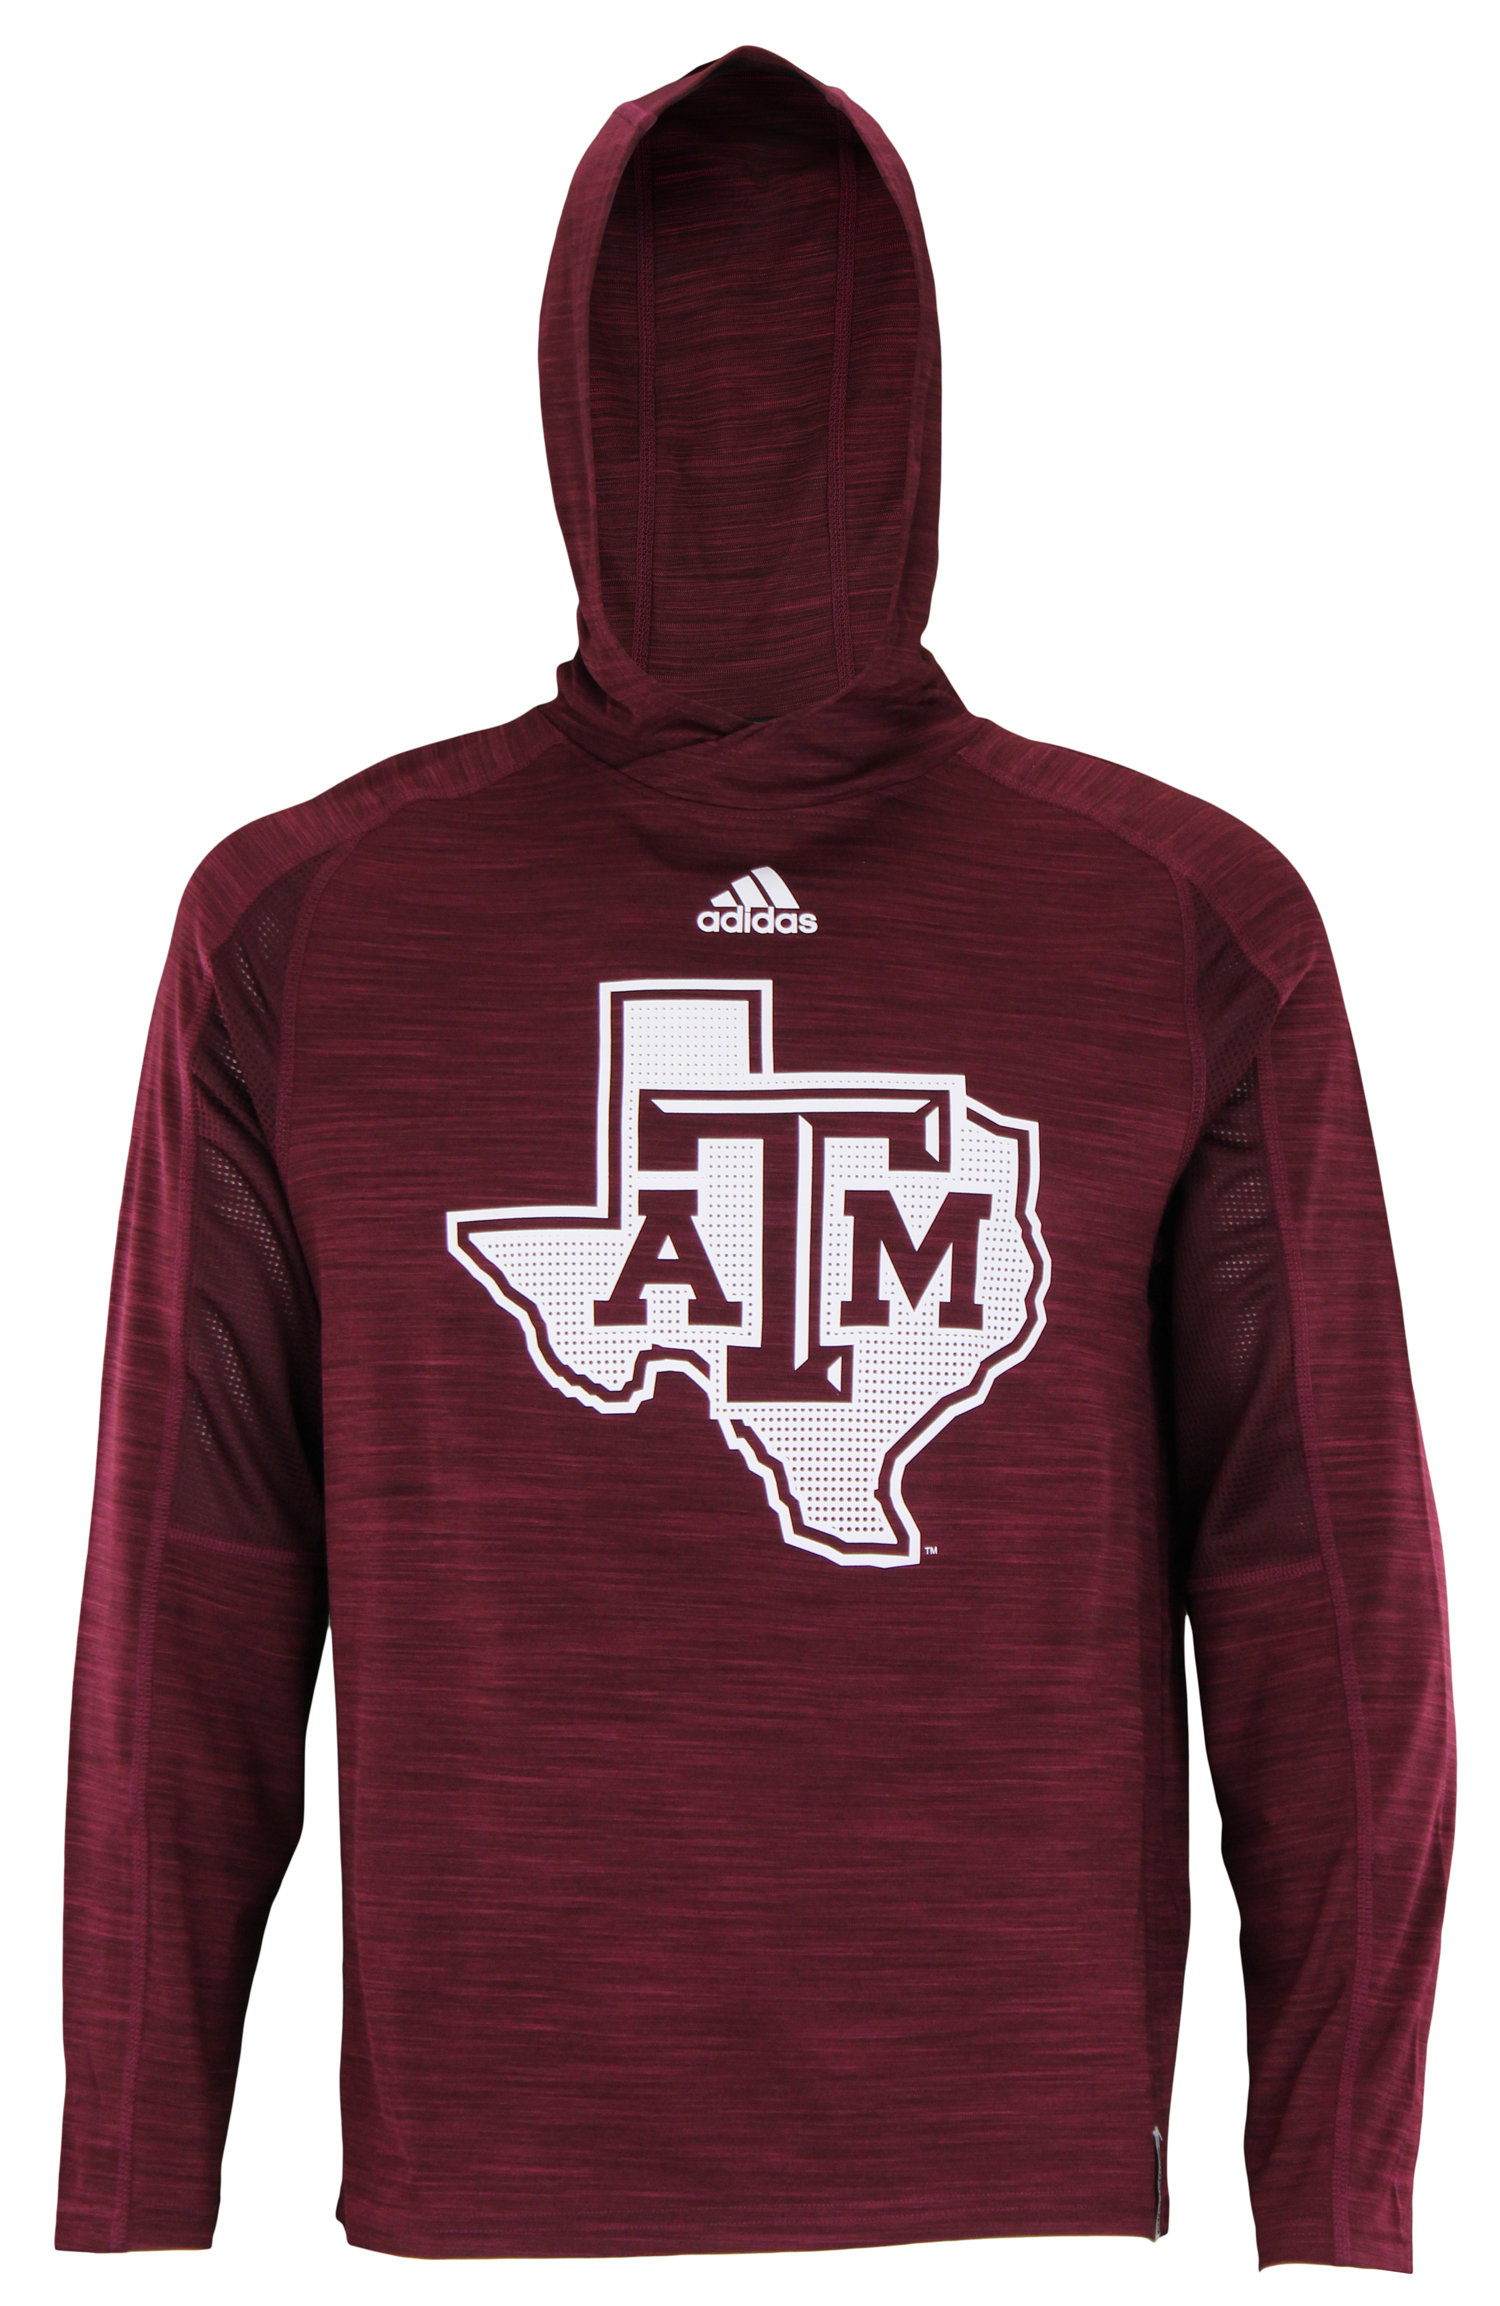 Adidas NCAA Men's Texas A&M Aggies Long Sleeve Training Hoodie | eBay